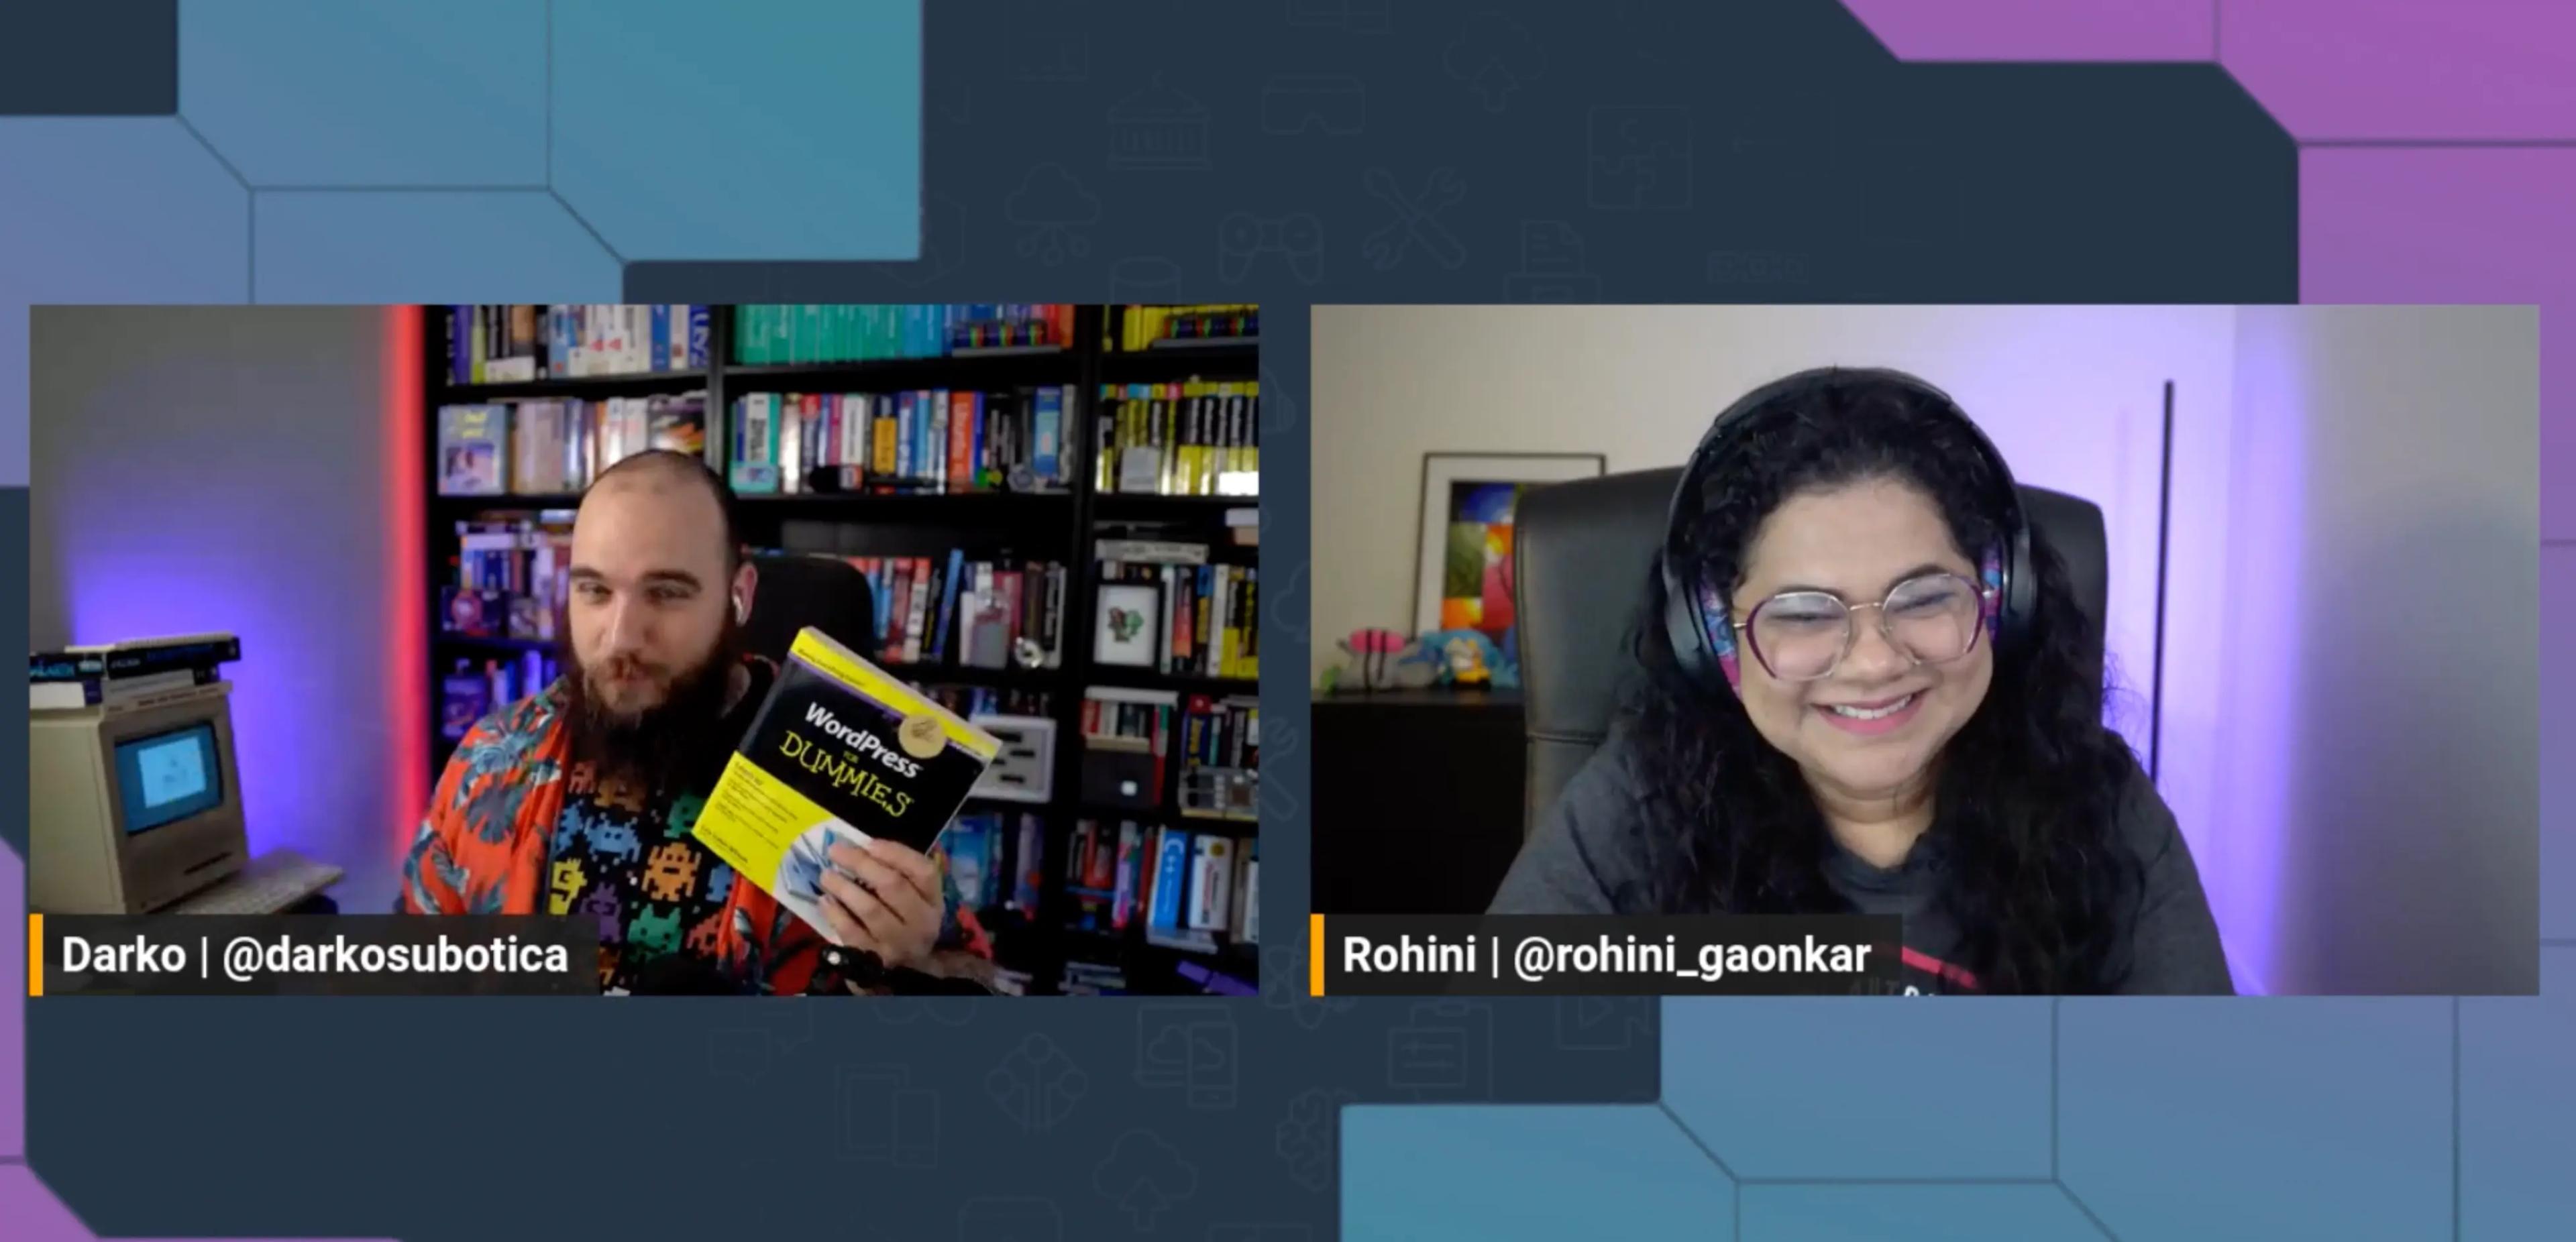 Screenshot of Rohini and Darko, while Darko is holding a 'for dummies' book